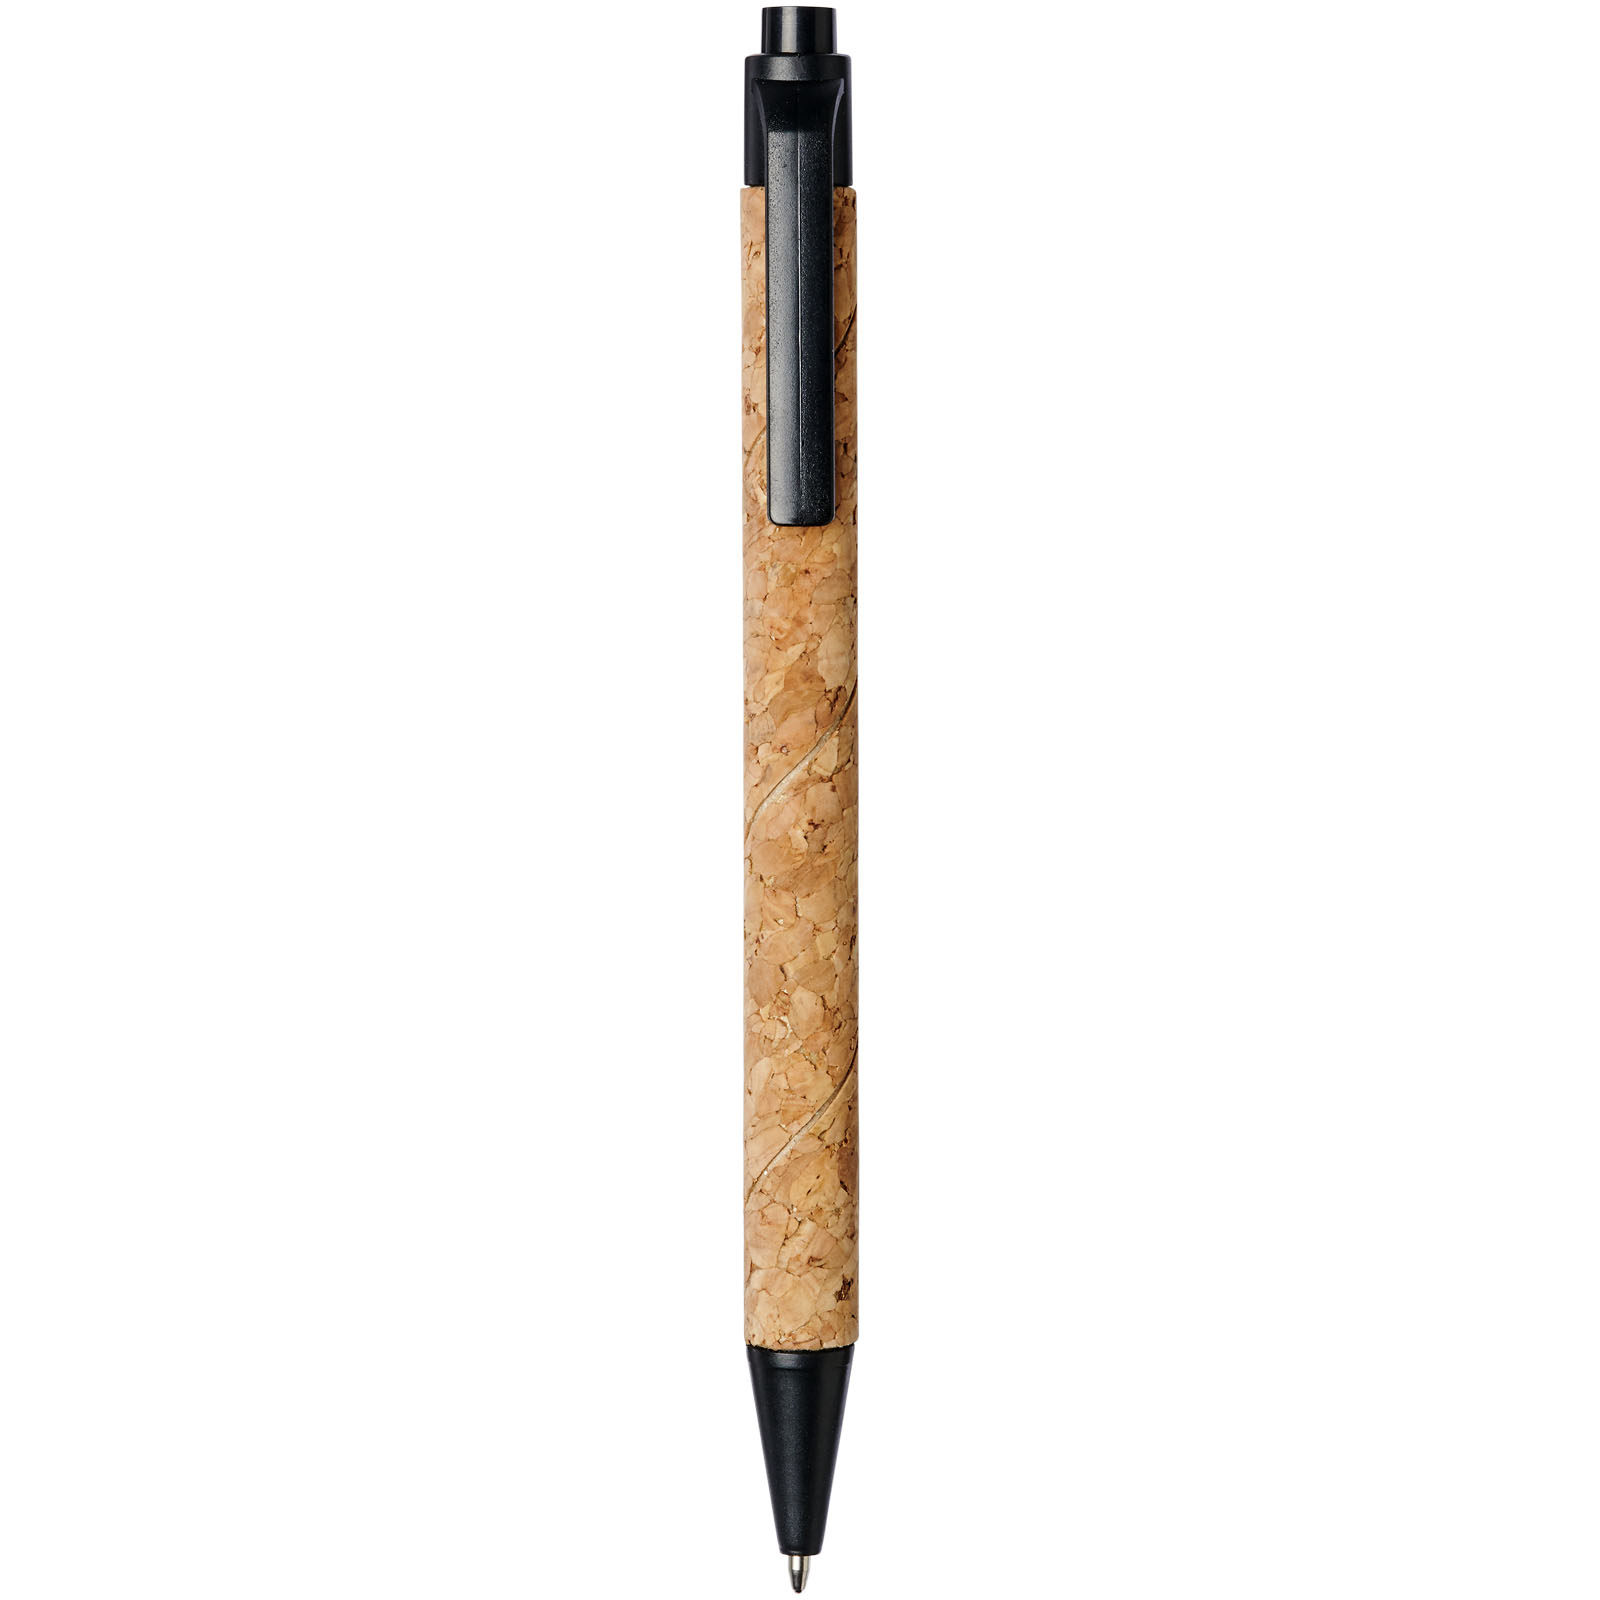 Advertising Ballpoint Pens - Midar cork and wheat straw ballpoint pen